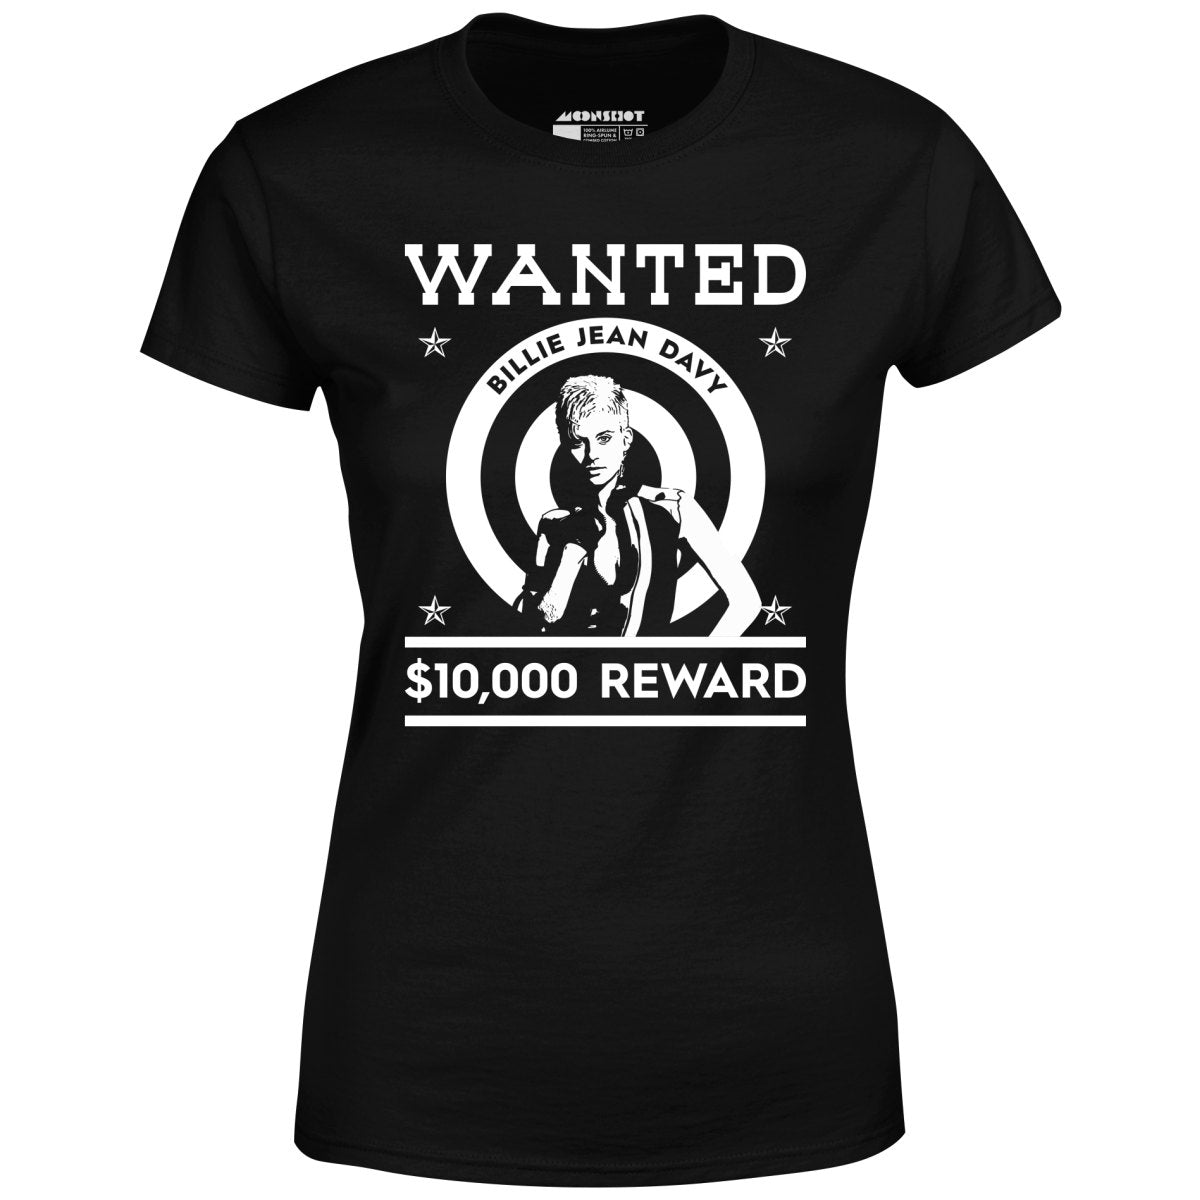 Wanted - Billie Jean Davy - Women's T-Shirt